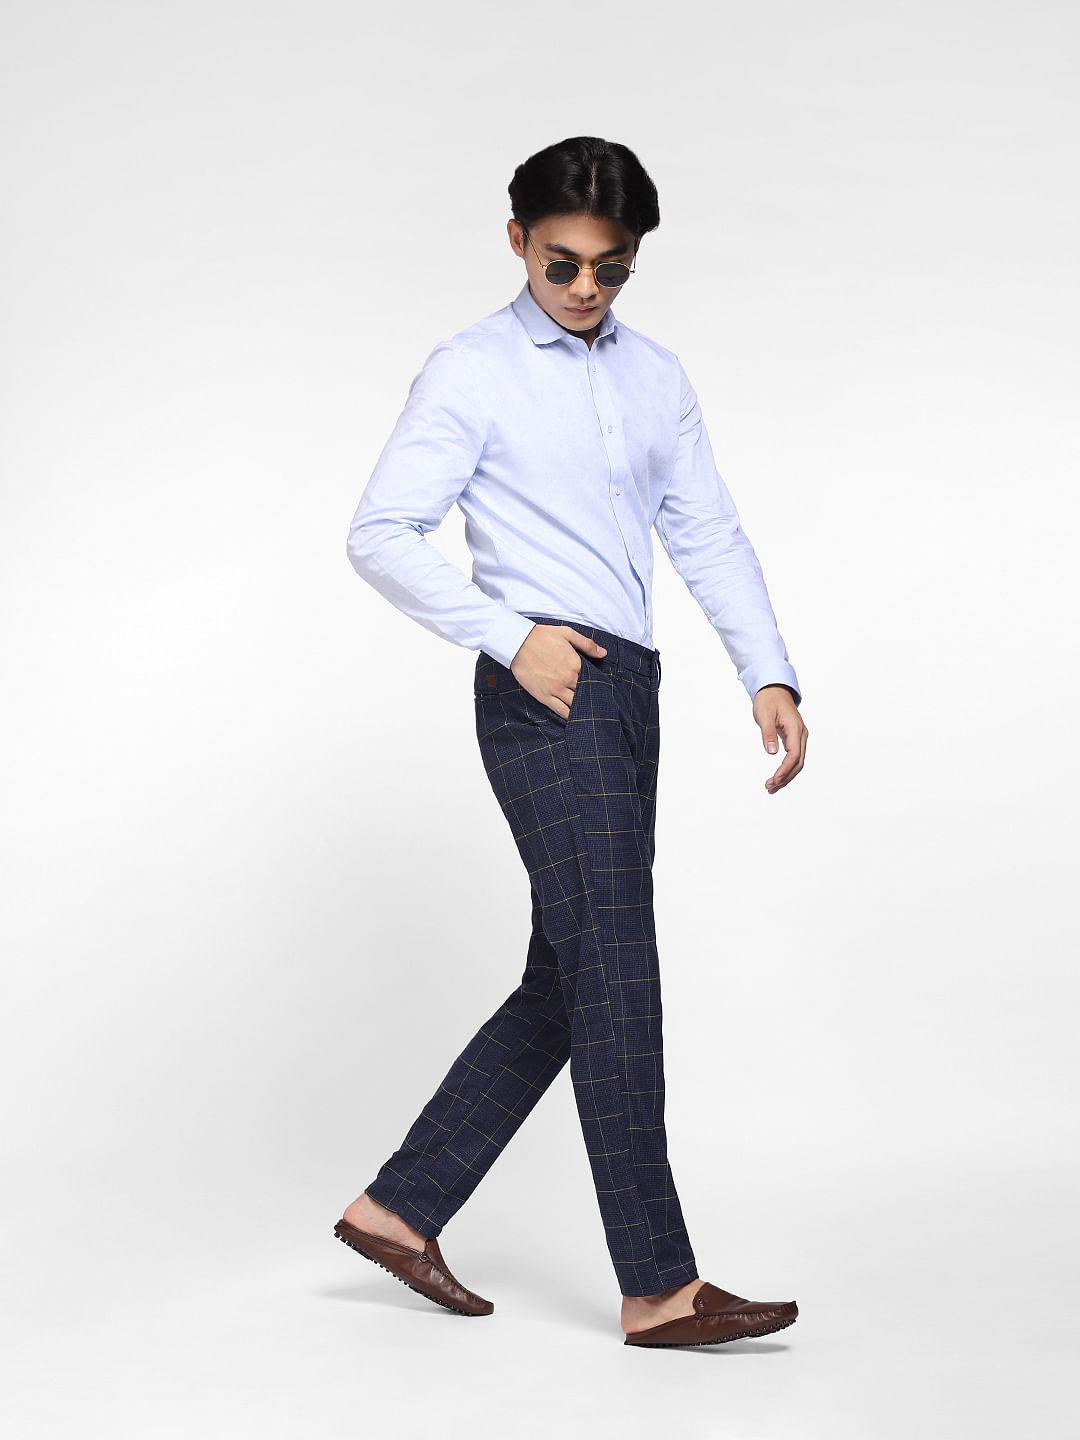 Formal pant shirt Navy blue pant firozi colour shirt stand color | Formal  pant shirt, Formal pant, Navy blue pants